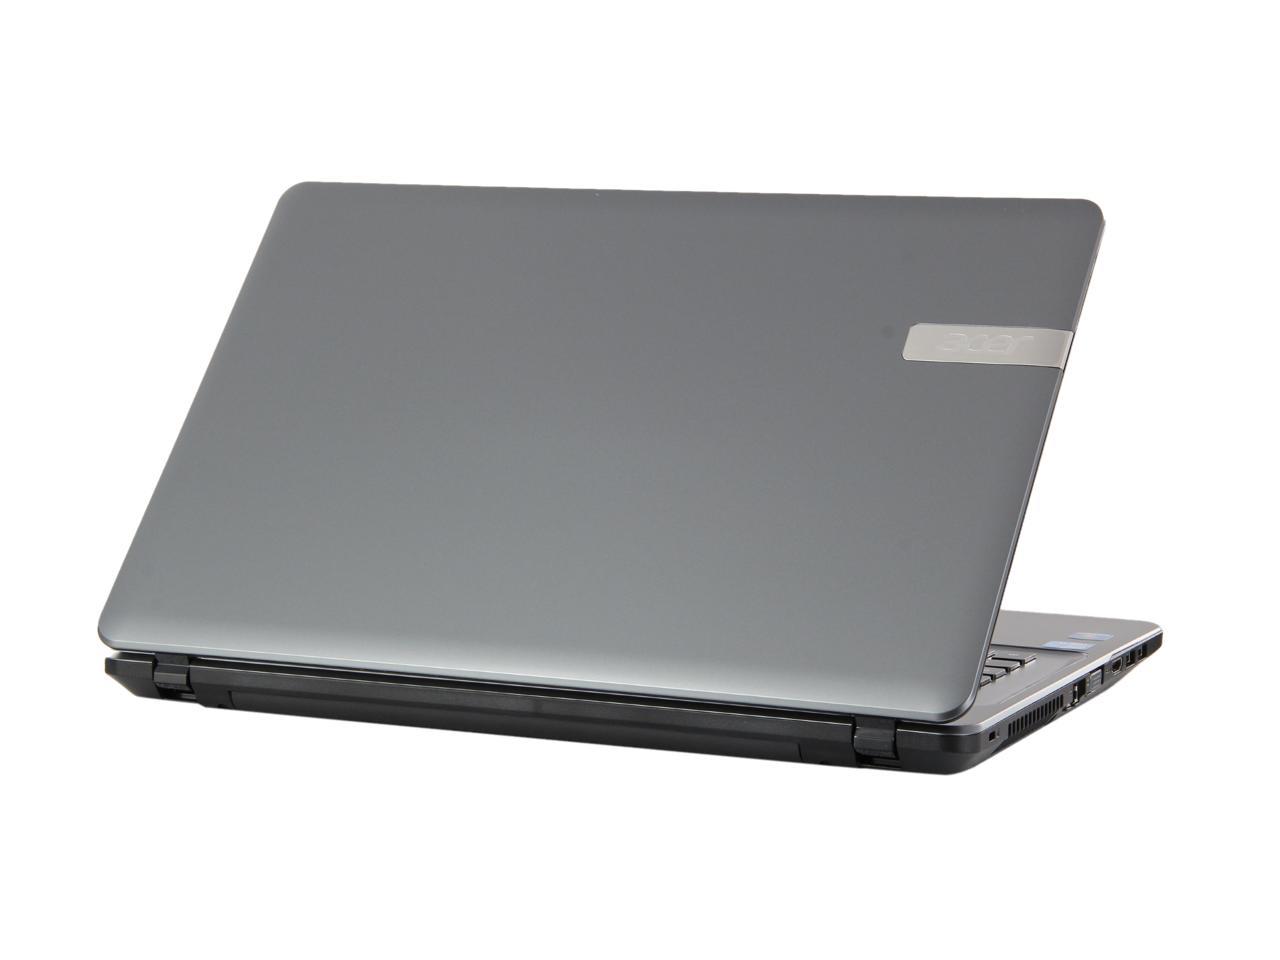 500GB SATA Serial ATA Internal Hard Drive for the Acer Aspire 5110 Notebook/Laptop